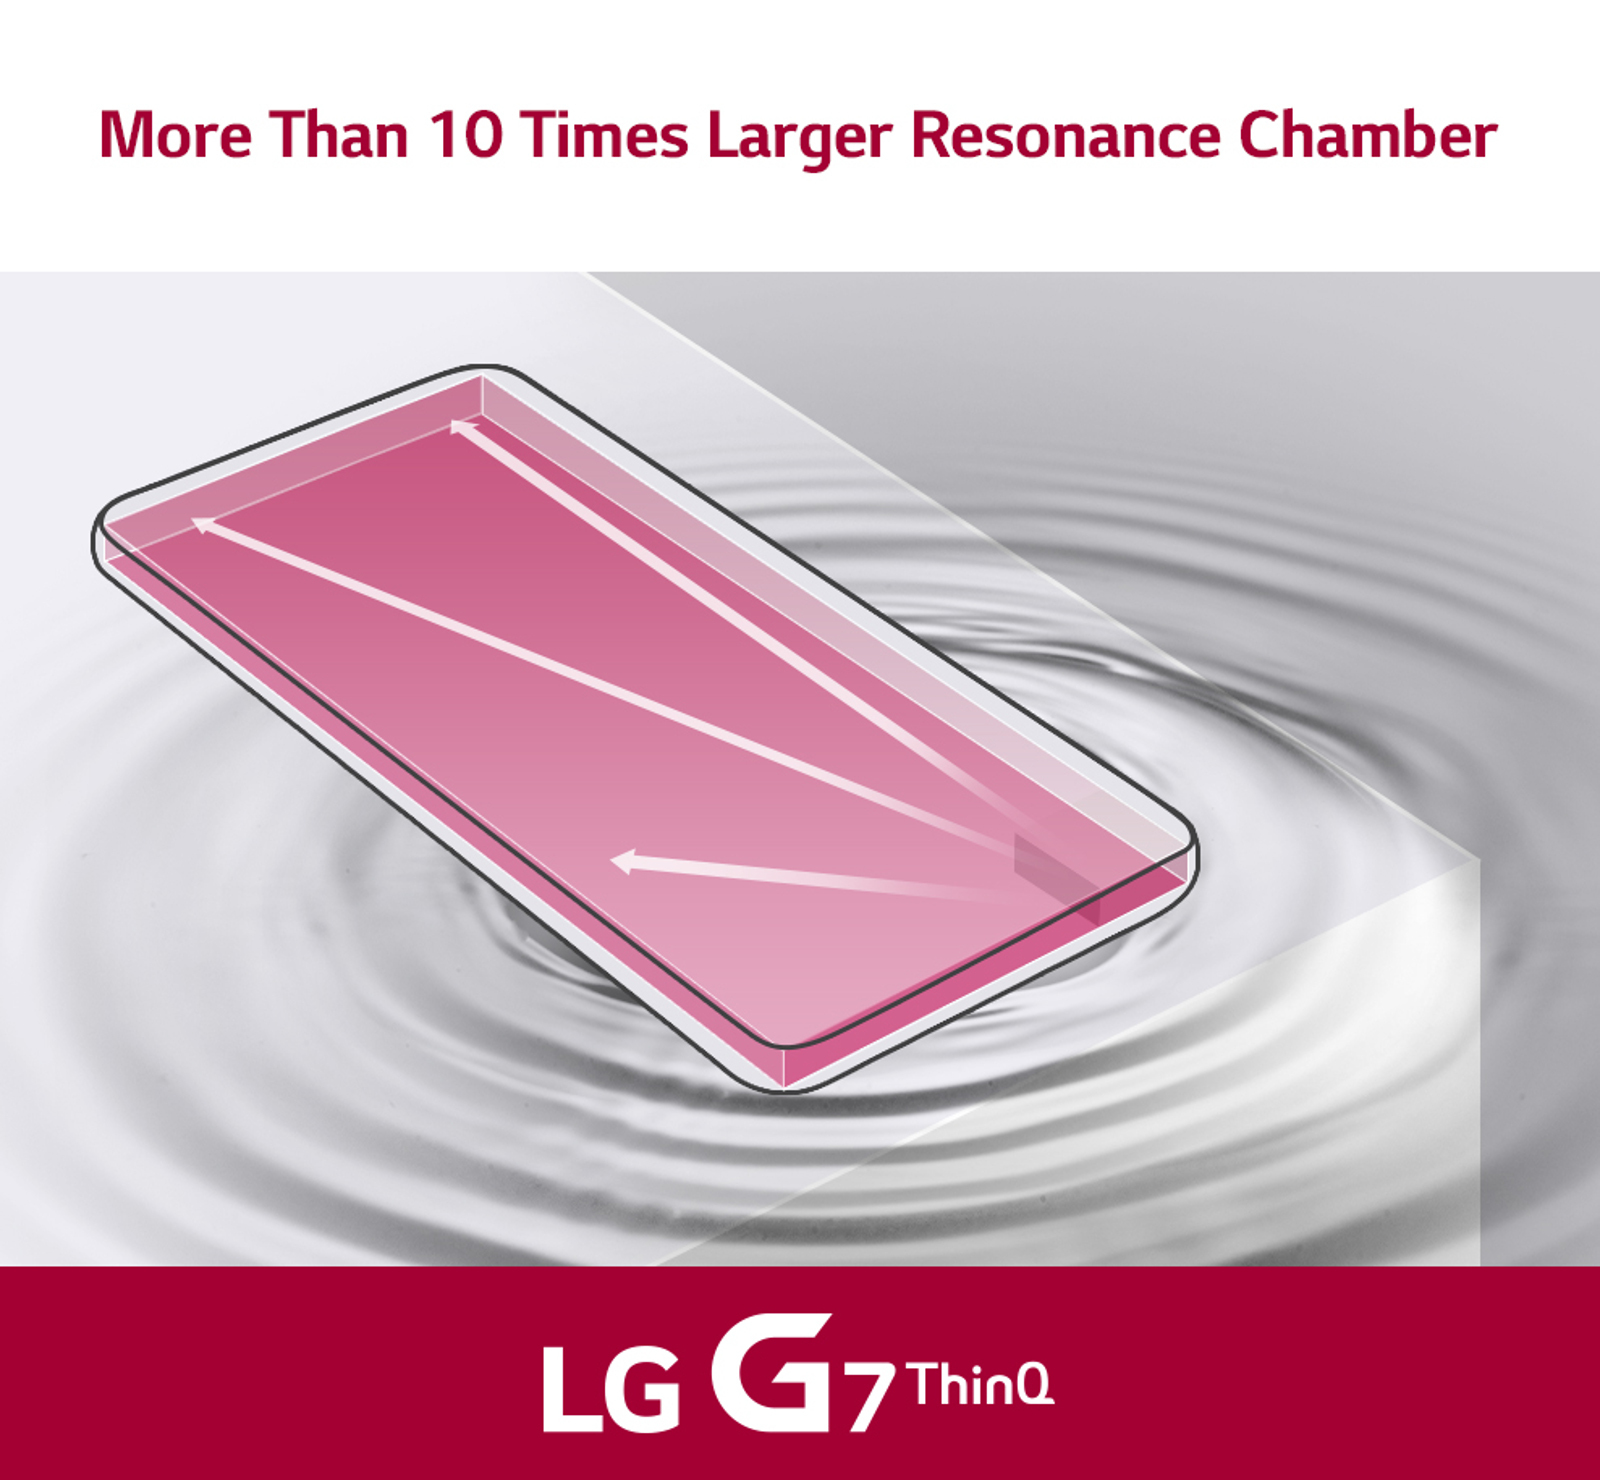 LG G7 sunet camera rezonanta